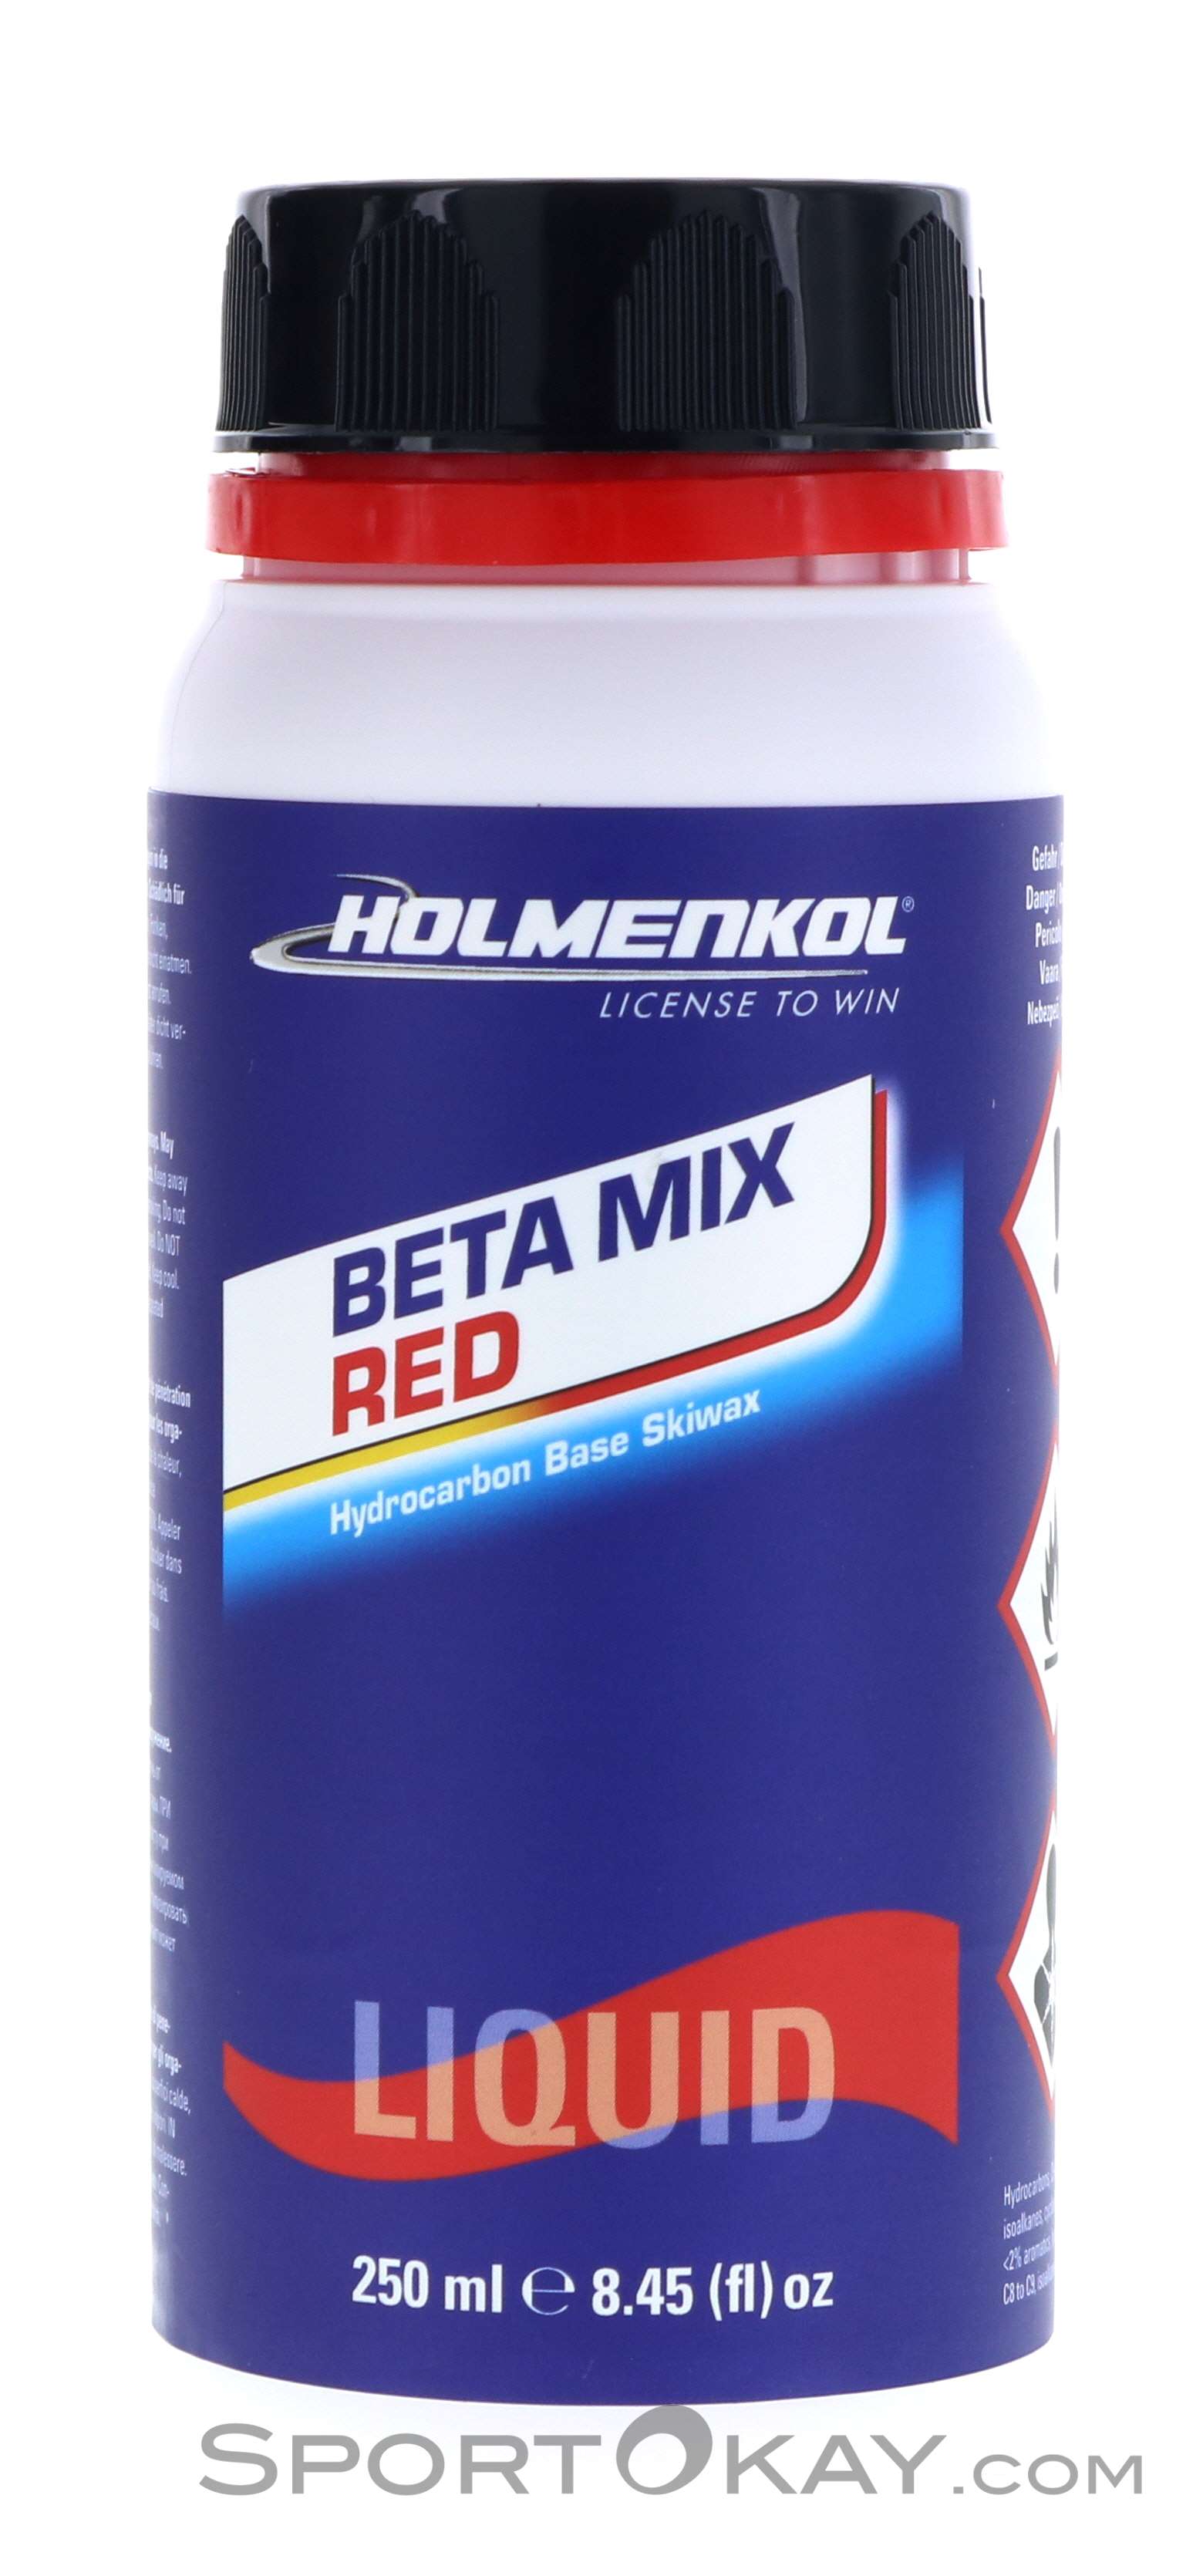 Brandewijn Arne Induceren Holmenkol Betamix Red Lighid 250ml Cera liquida - Cere - Manutenzione e  cura sci - Sci&Freeride - Tutti